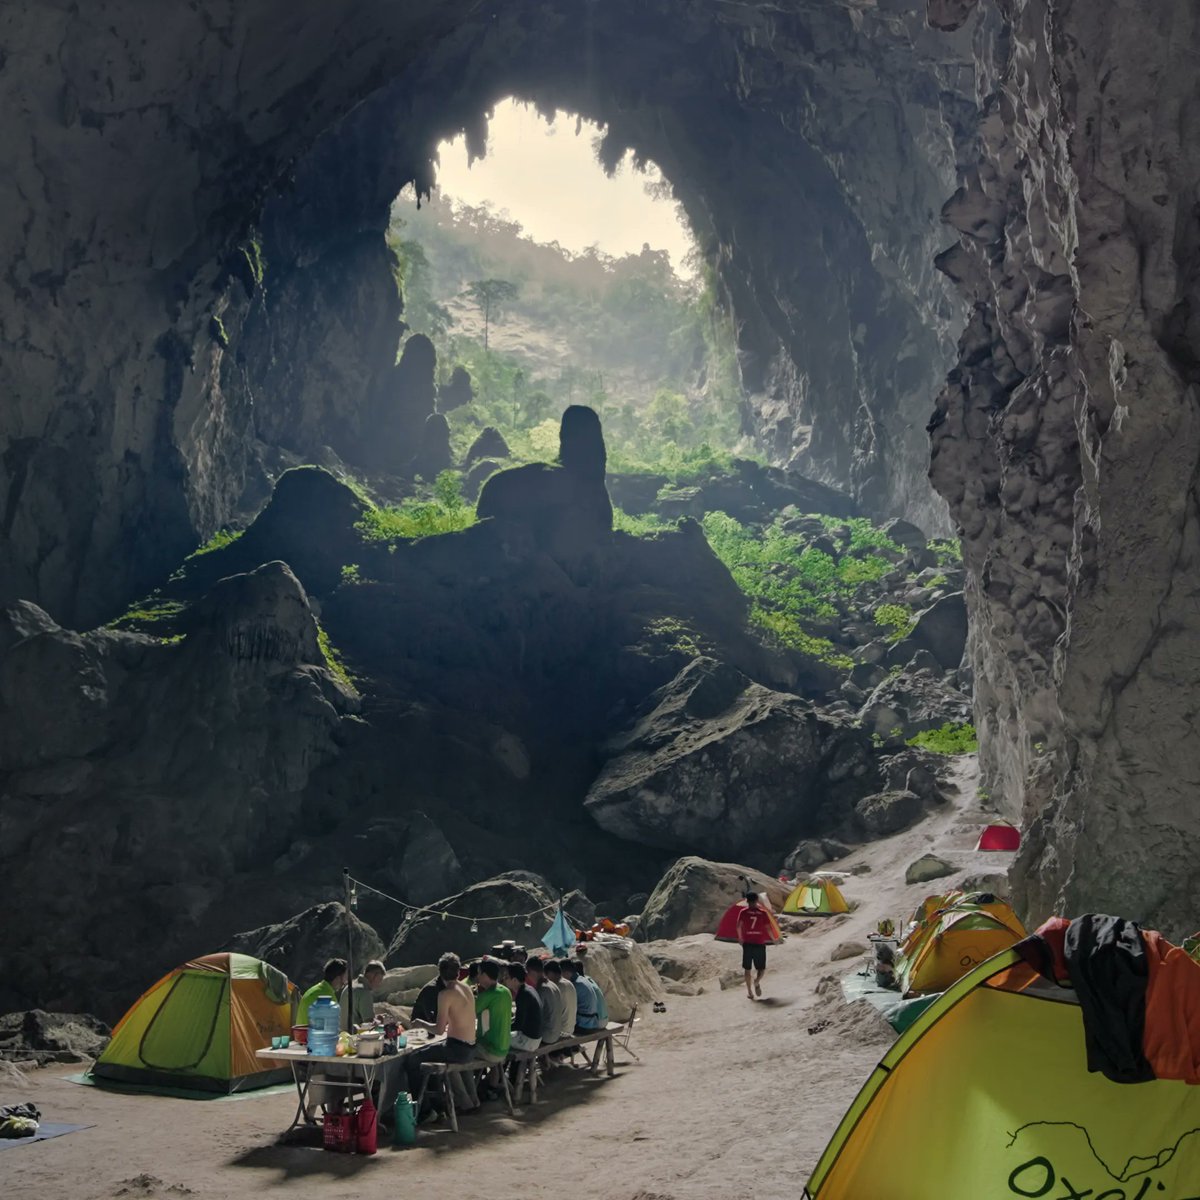 Nothing beats breakfast with a view.

#sondoong #acrackinthemountain #caves #caving #cavephotography #exploration #extremephotography #adventure #vietnam #wanderlust #underground, #earthvisuals #hangsondoong, #phongnha #breakfast #breakfastwithaview #camping #glamping